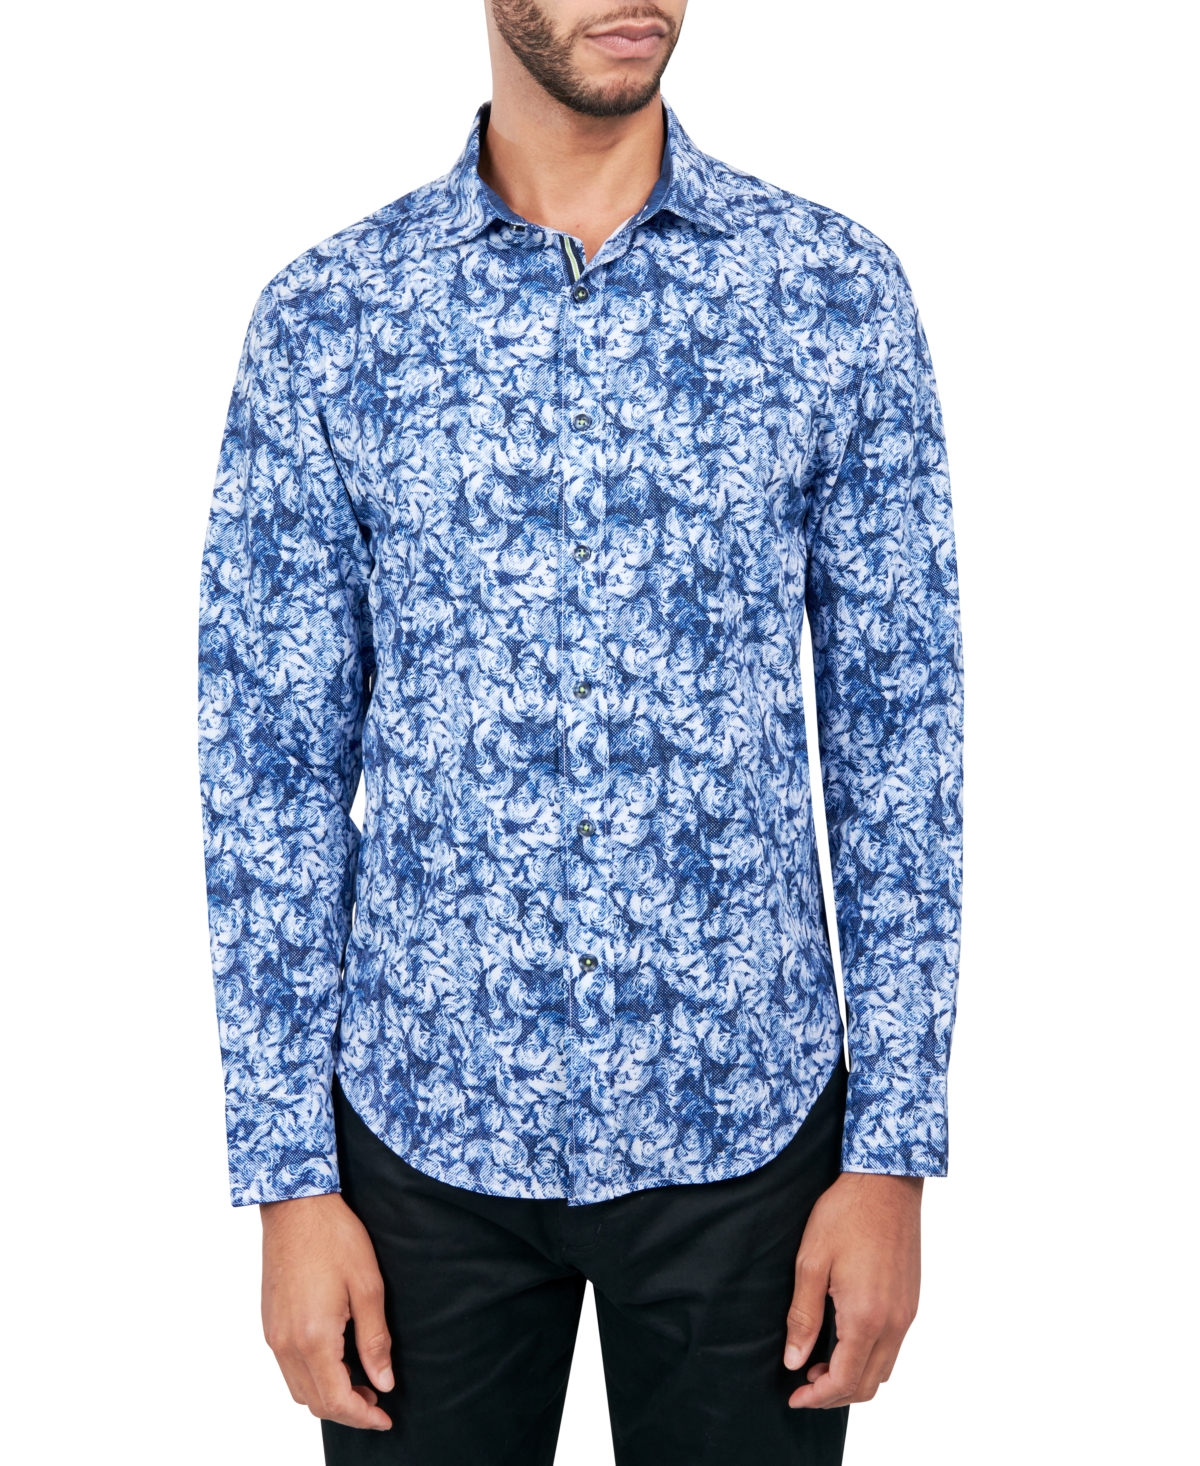 Men's Regular-Fit Non-Iron Performance Stretch Rose-Print Button-Down Shirt - Blue